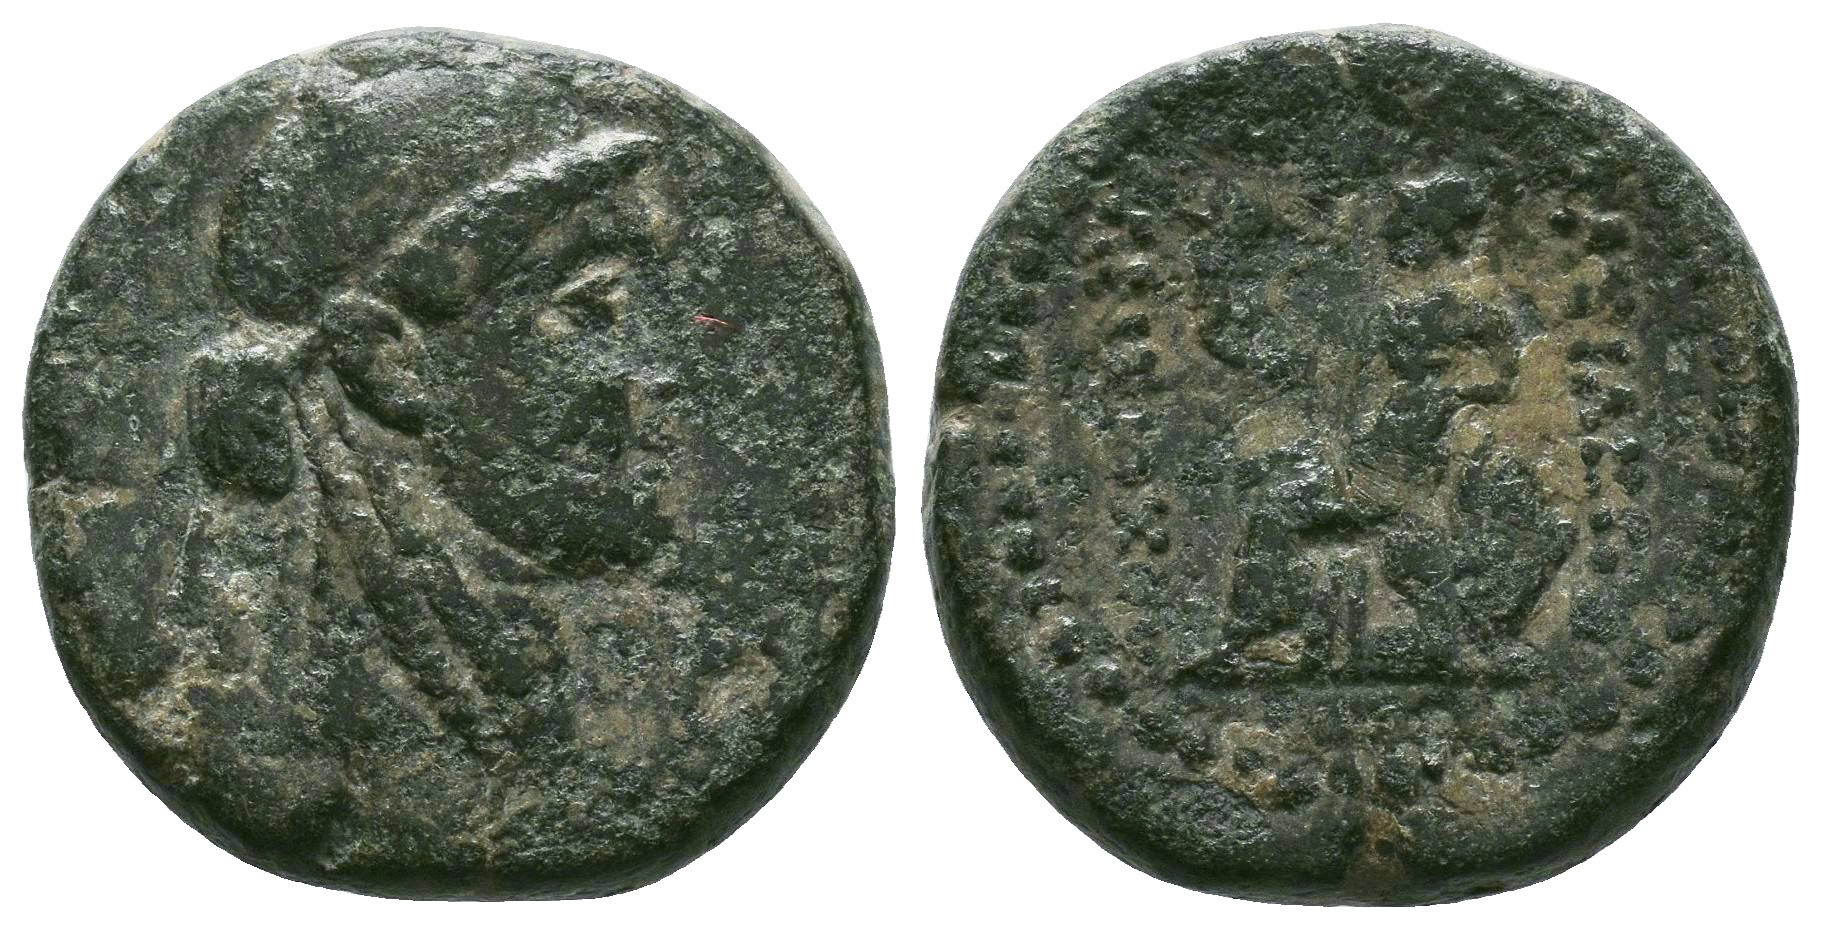 Antiochus III